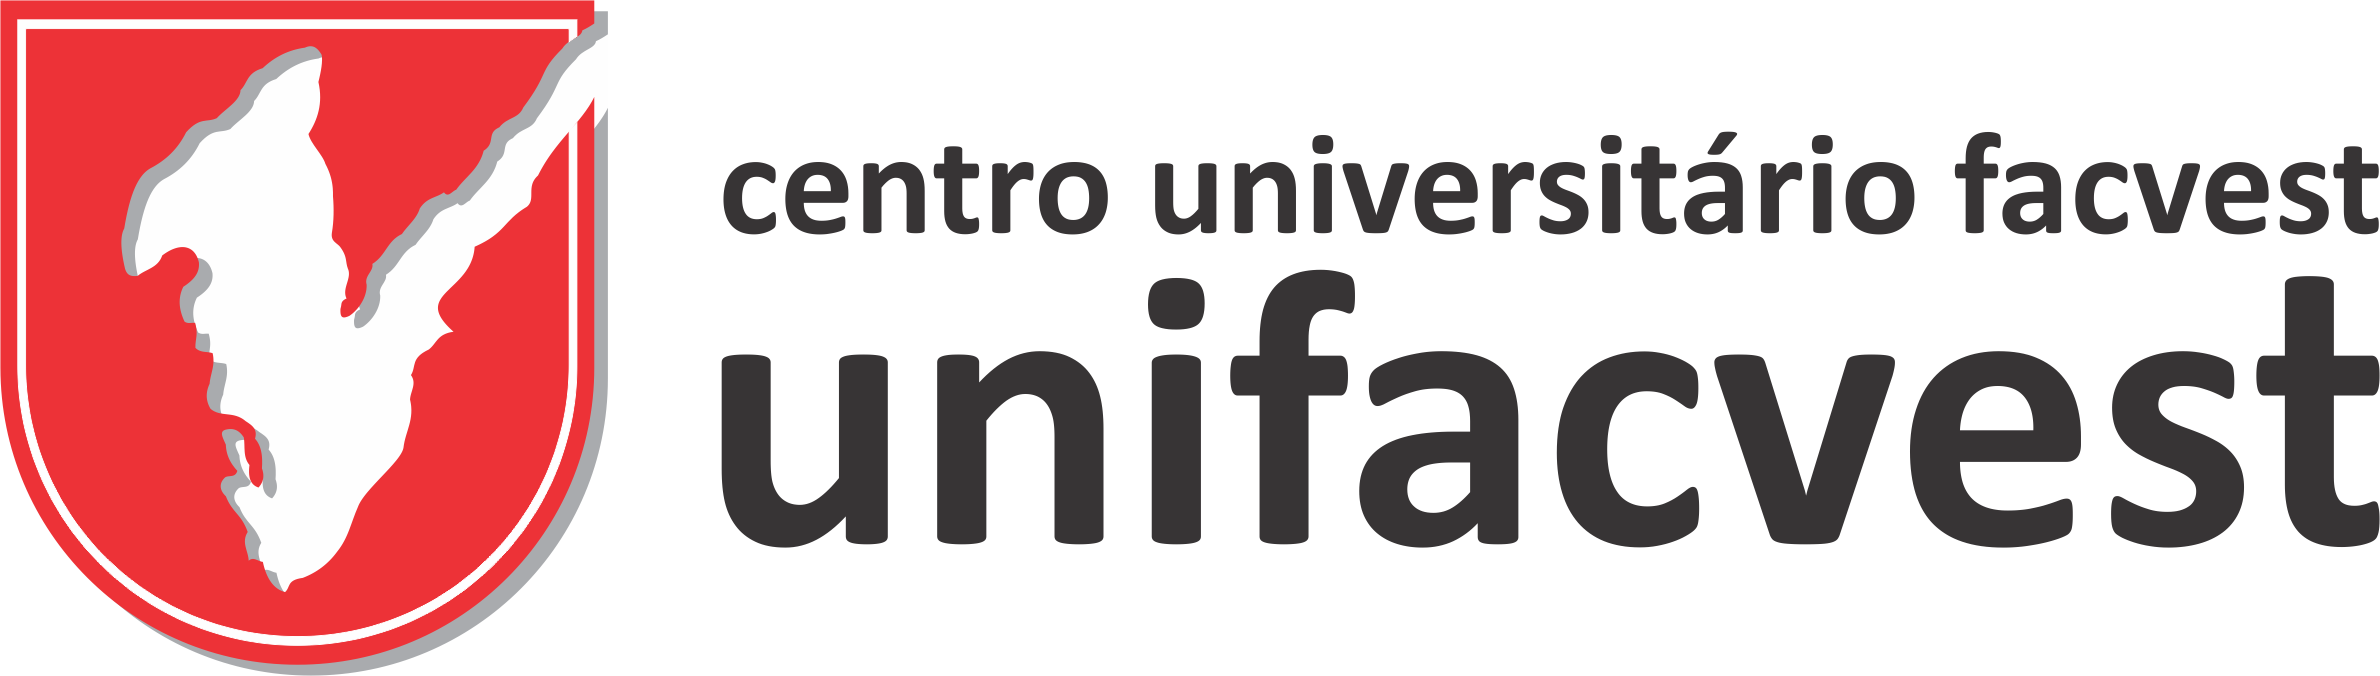 Unifacvest Logo